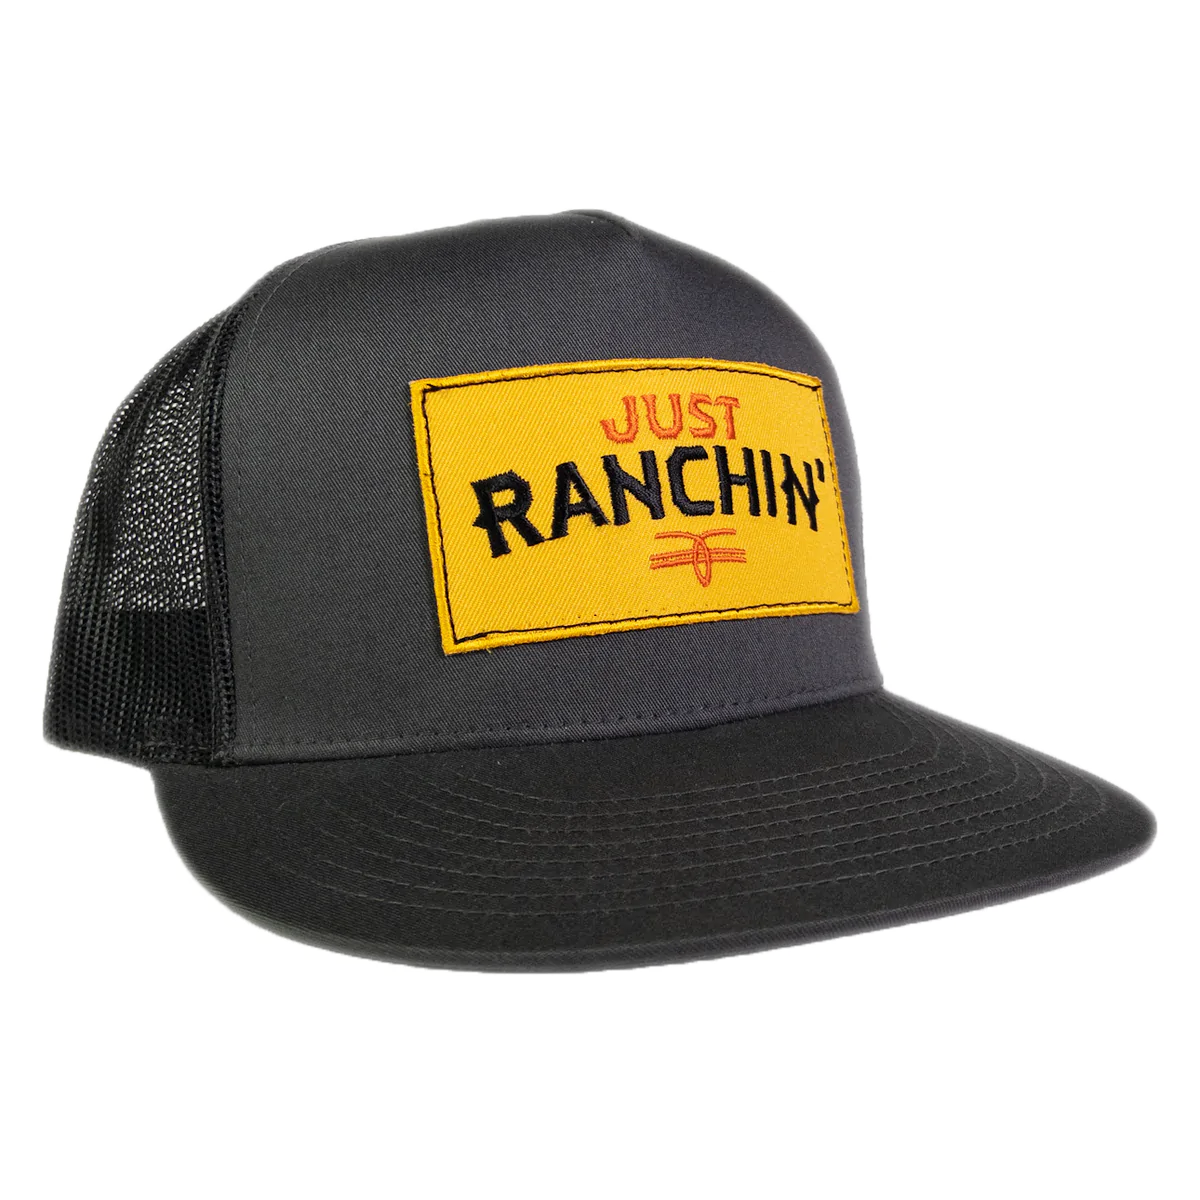 Just Ranchin Patch Charcoal Mesh Flatbill